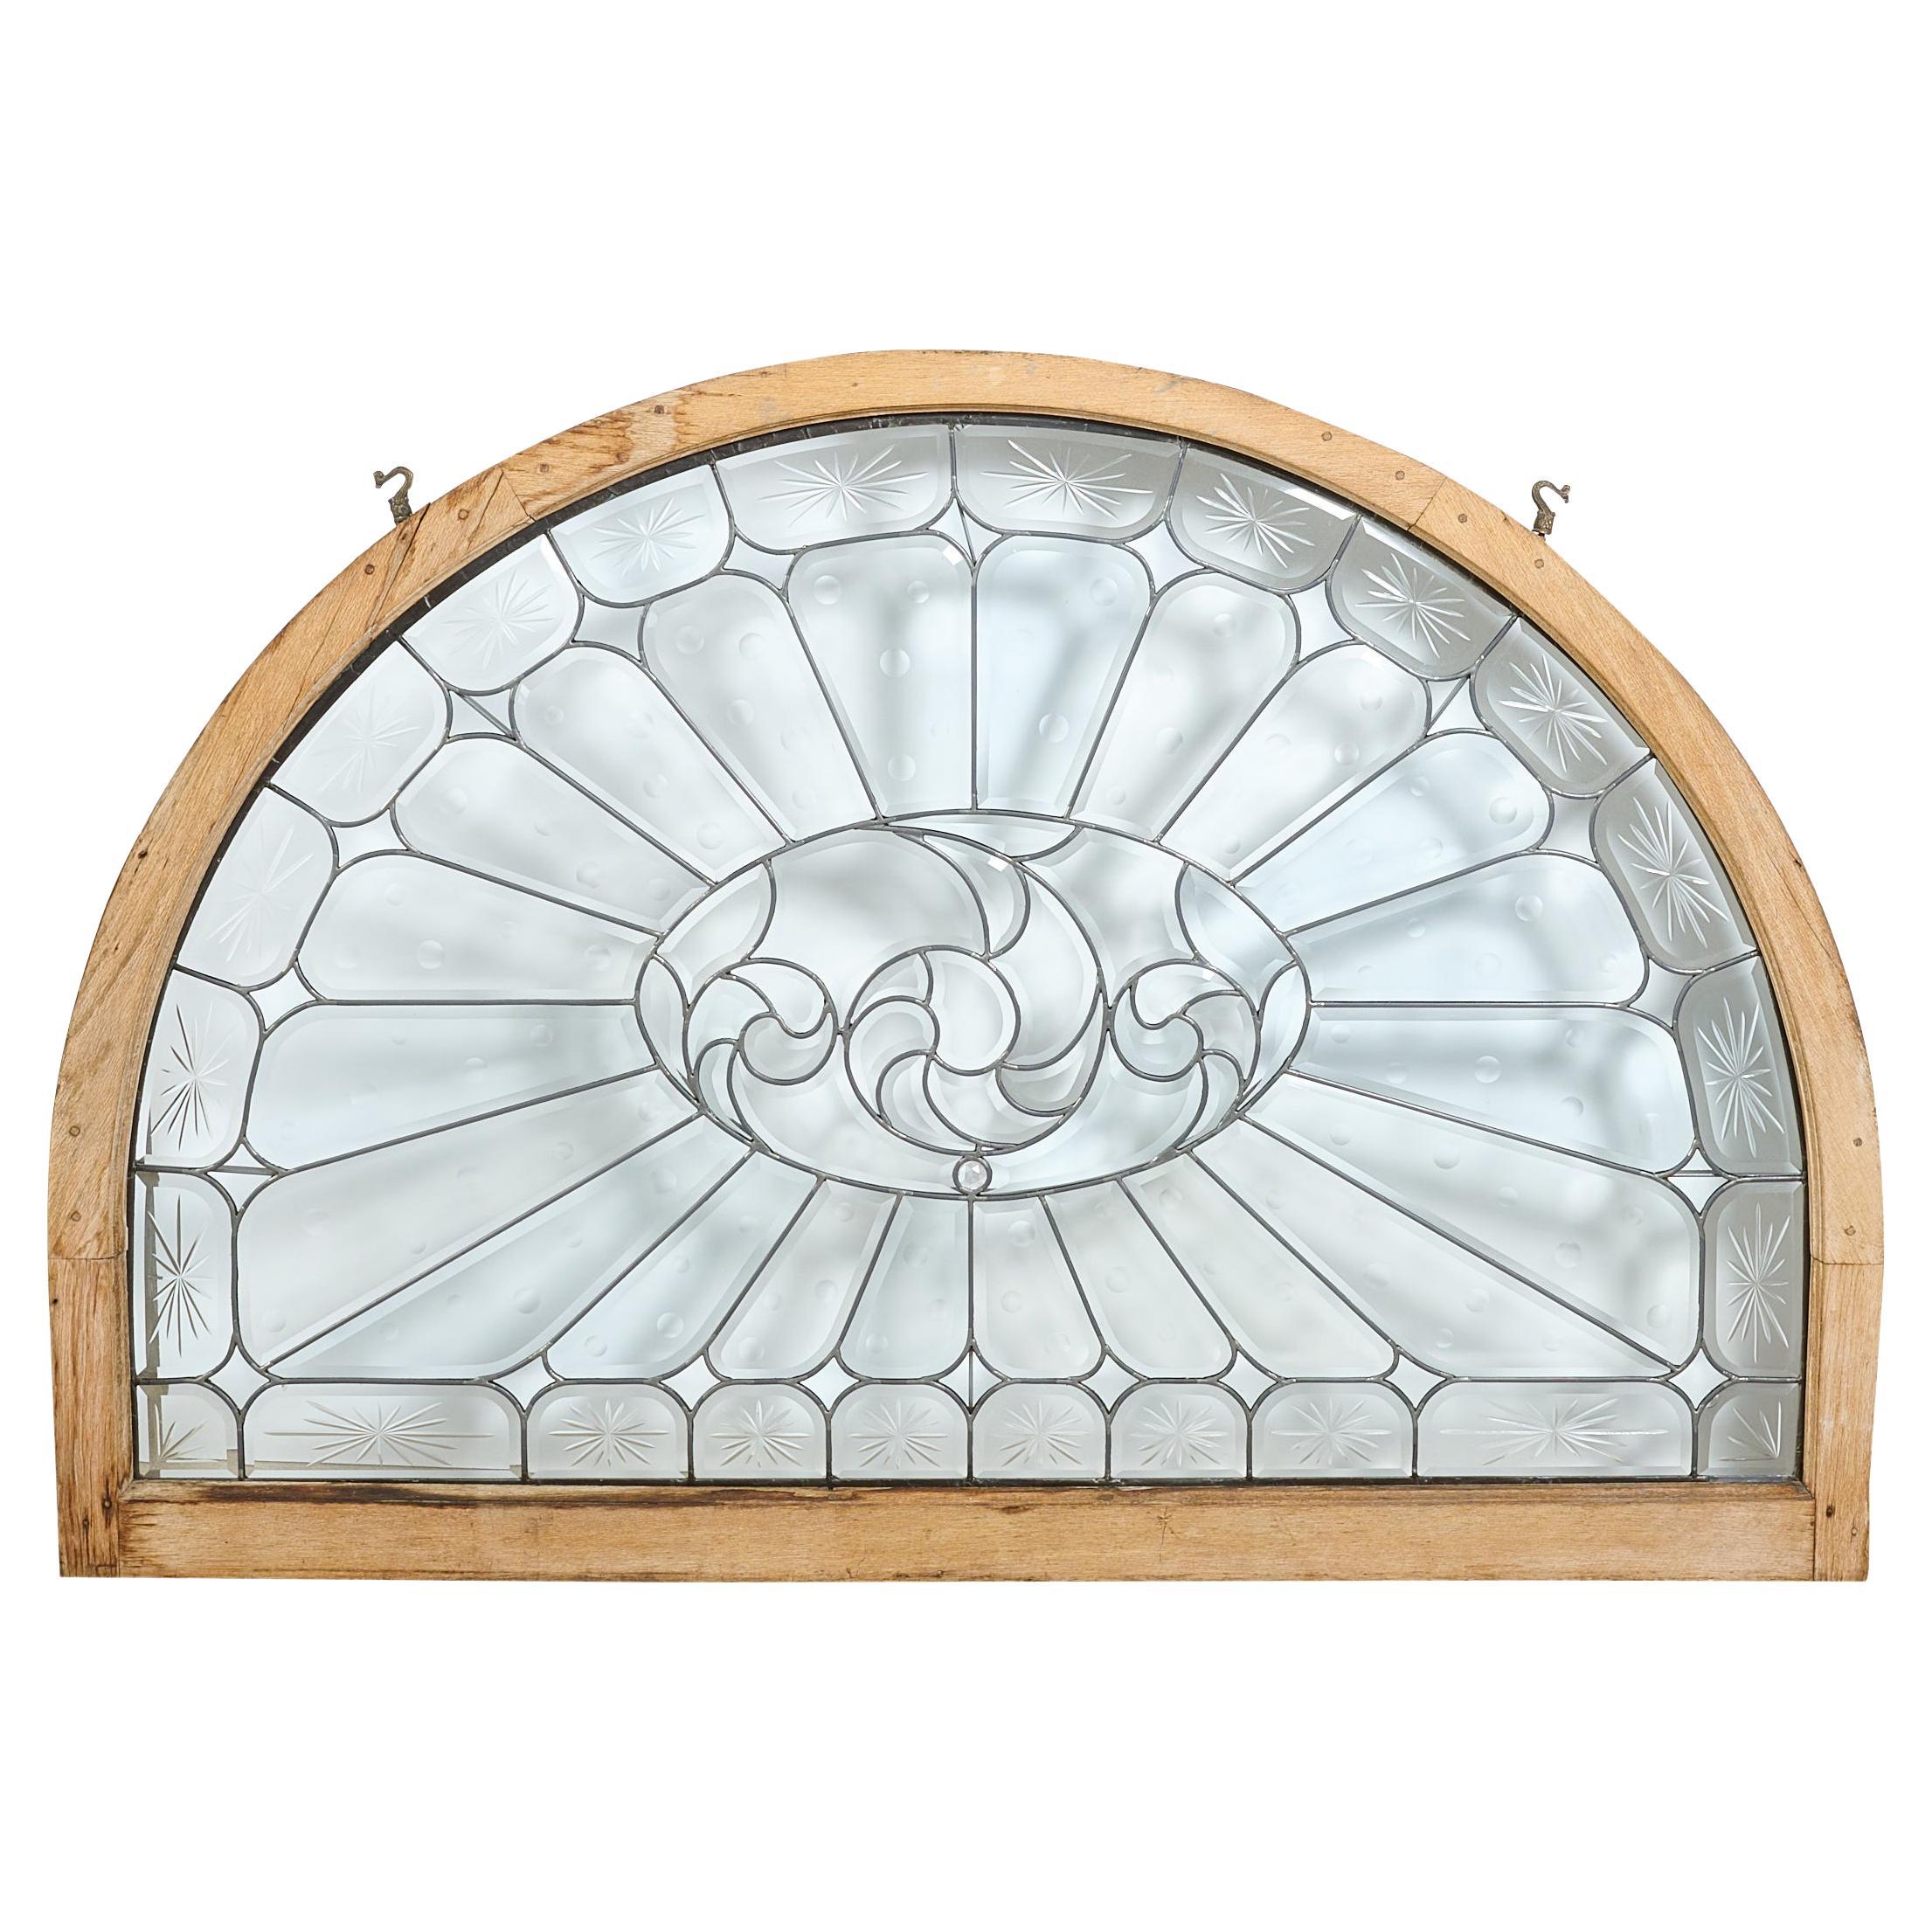 Restored Beveled & Wheel Cut Arch Top Window For Sale